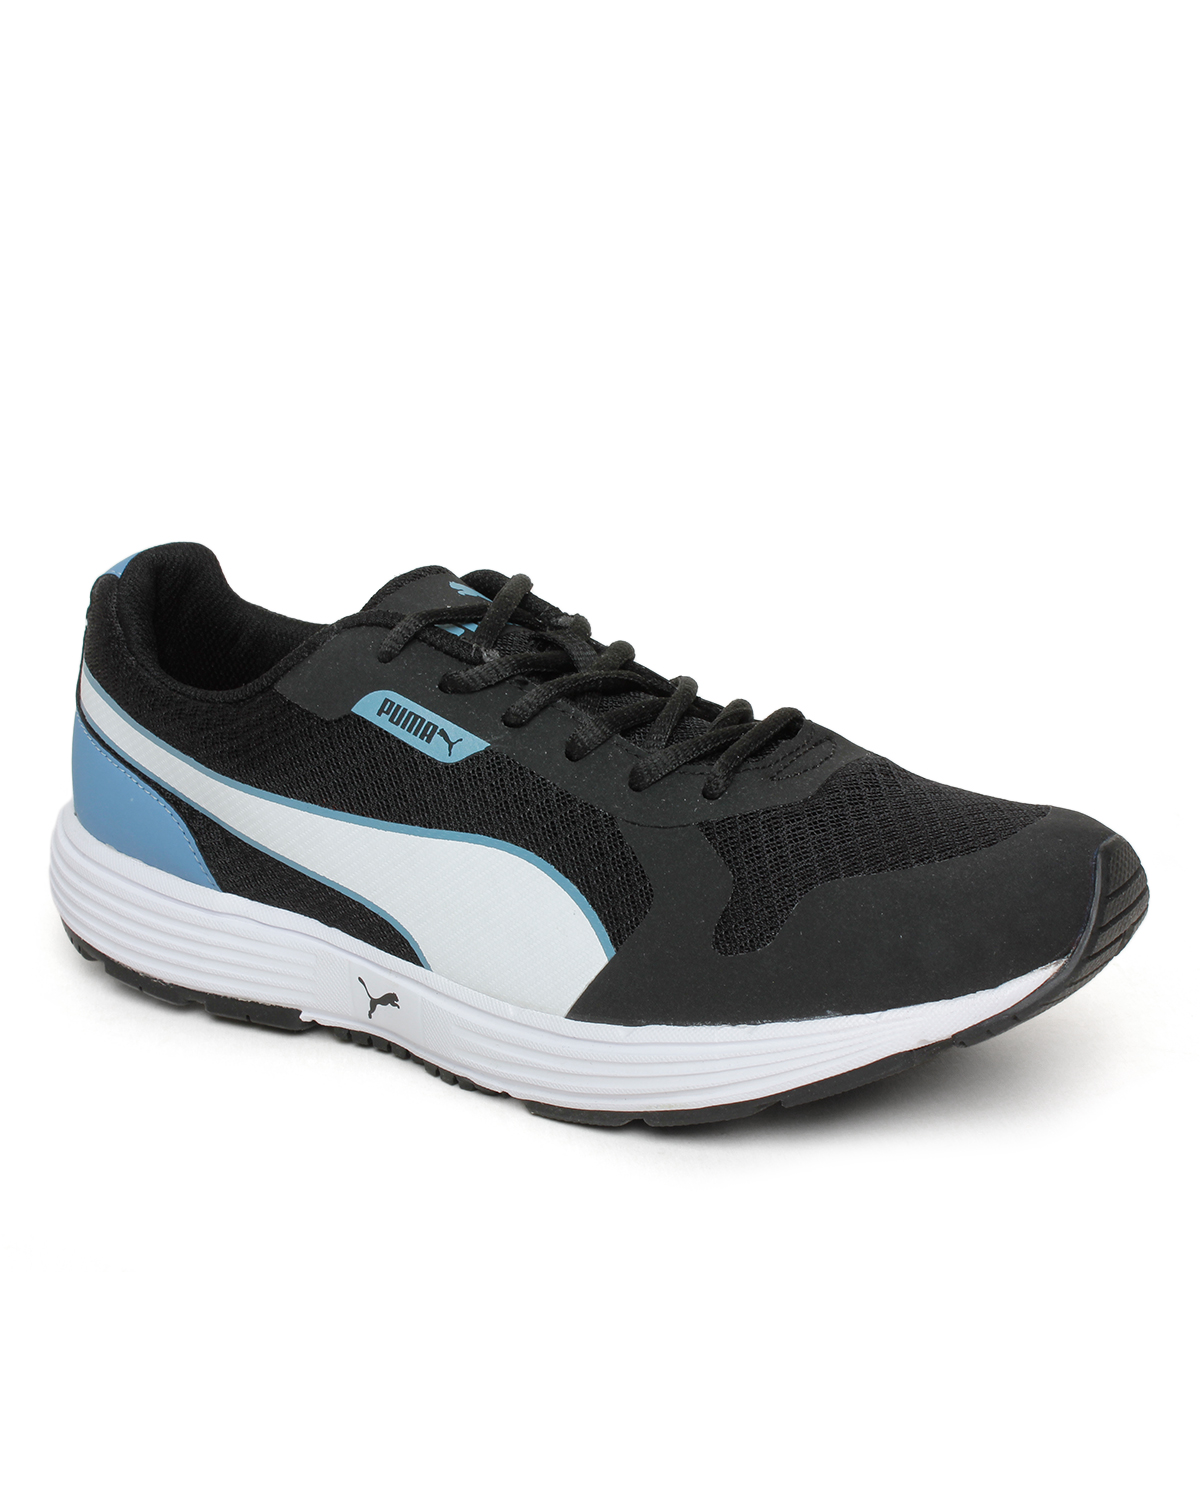 Buy Puma Men Black Running Shoes (36174301) Online @ ₹3499 from ShopClues